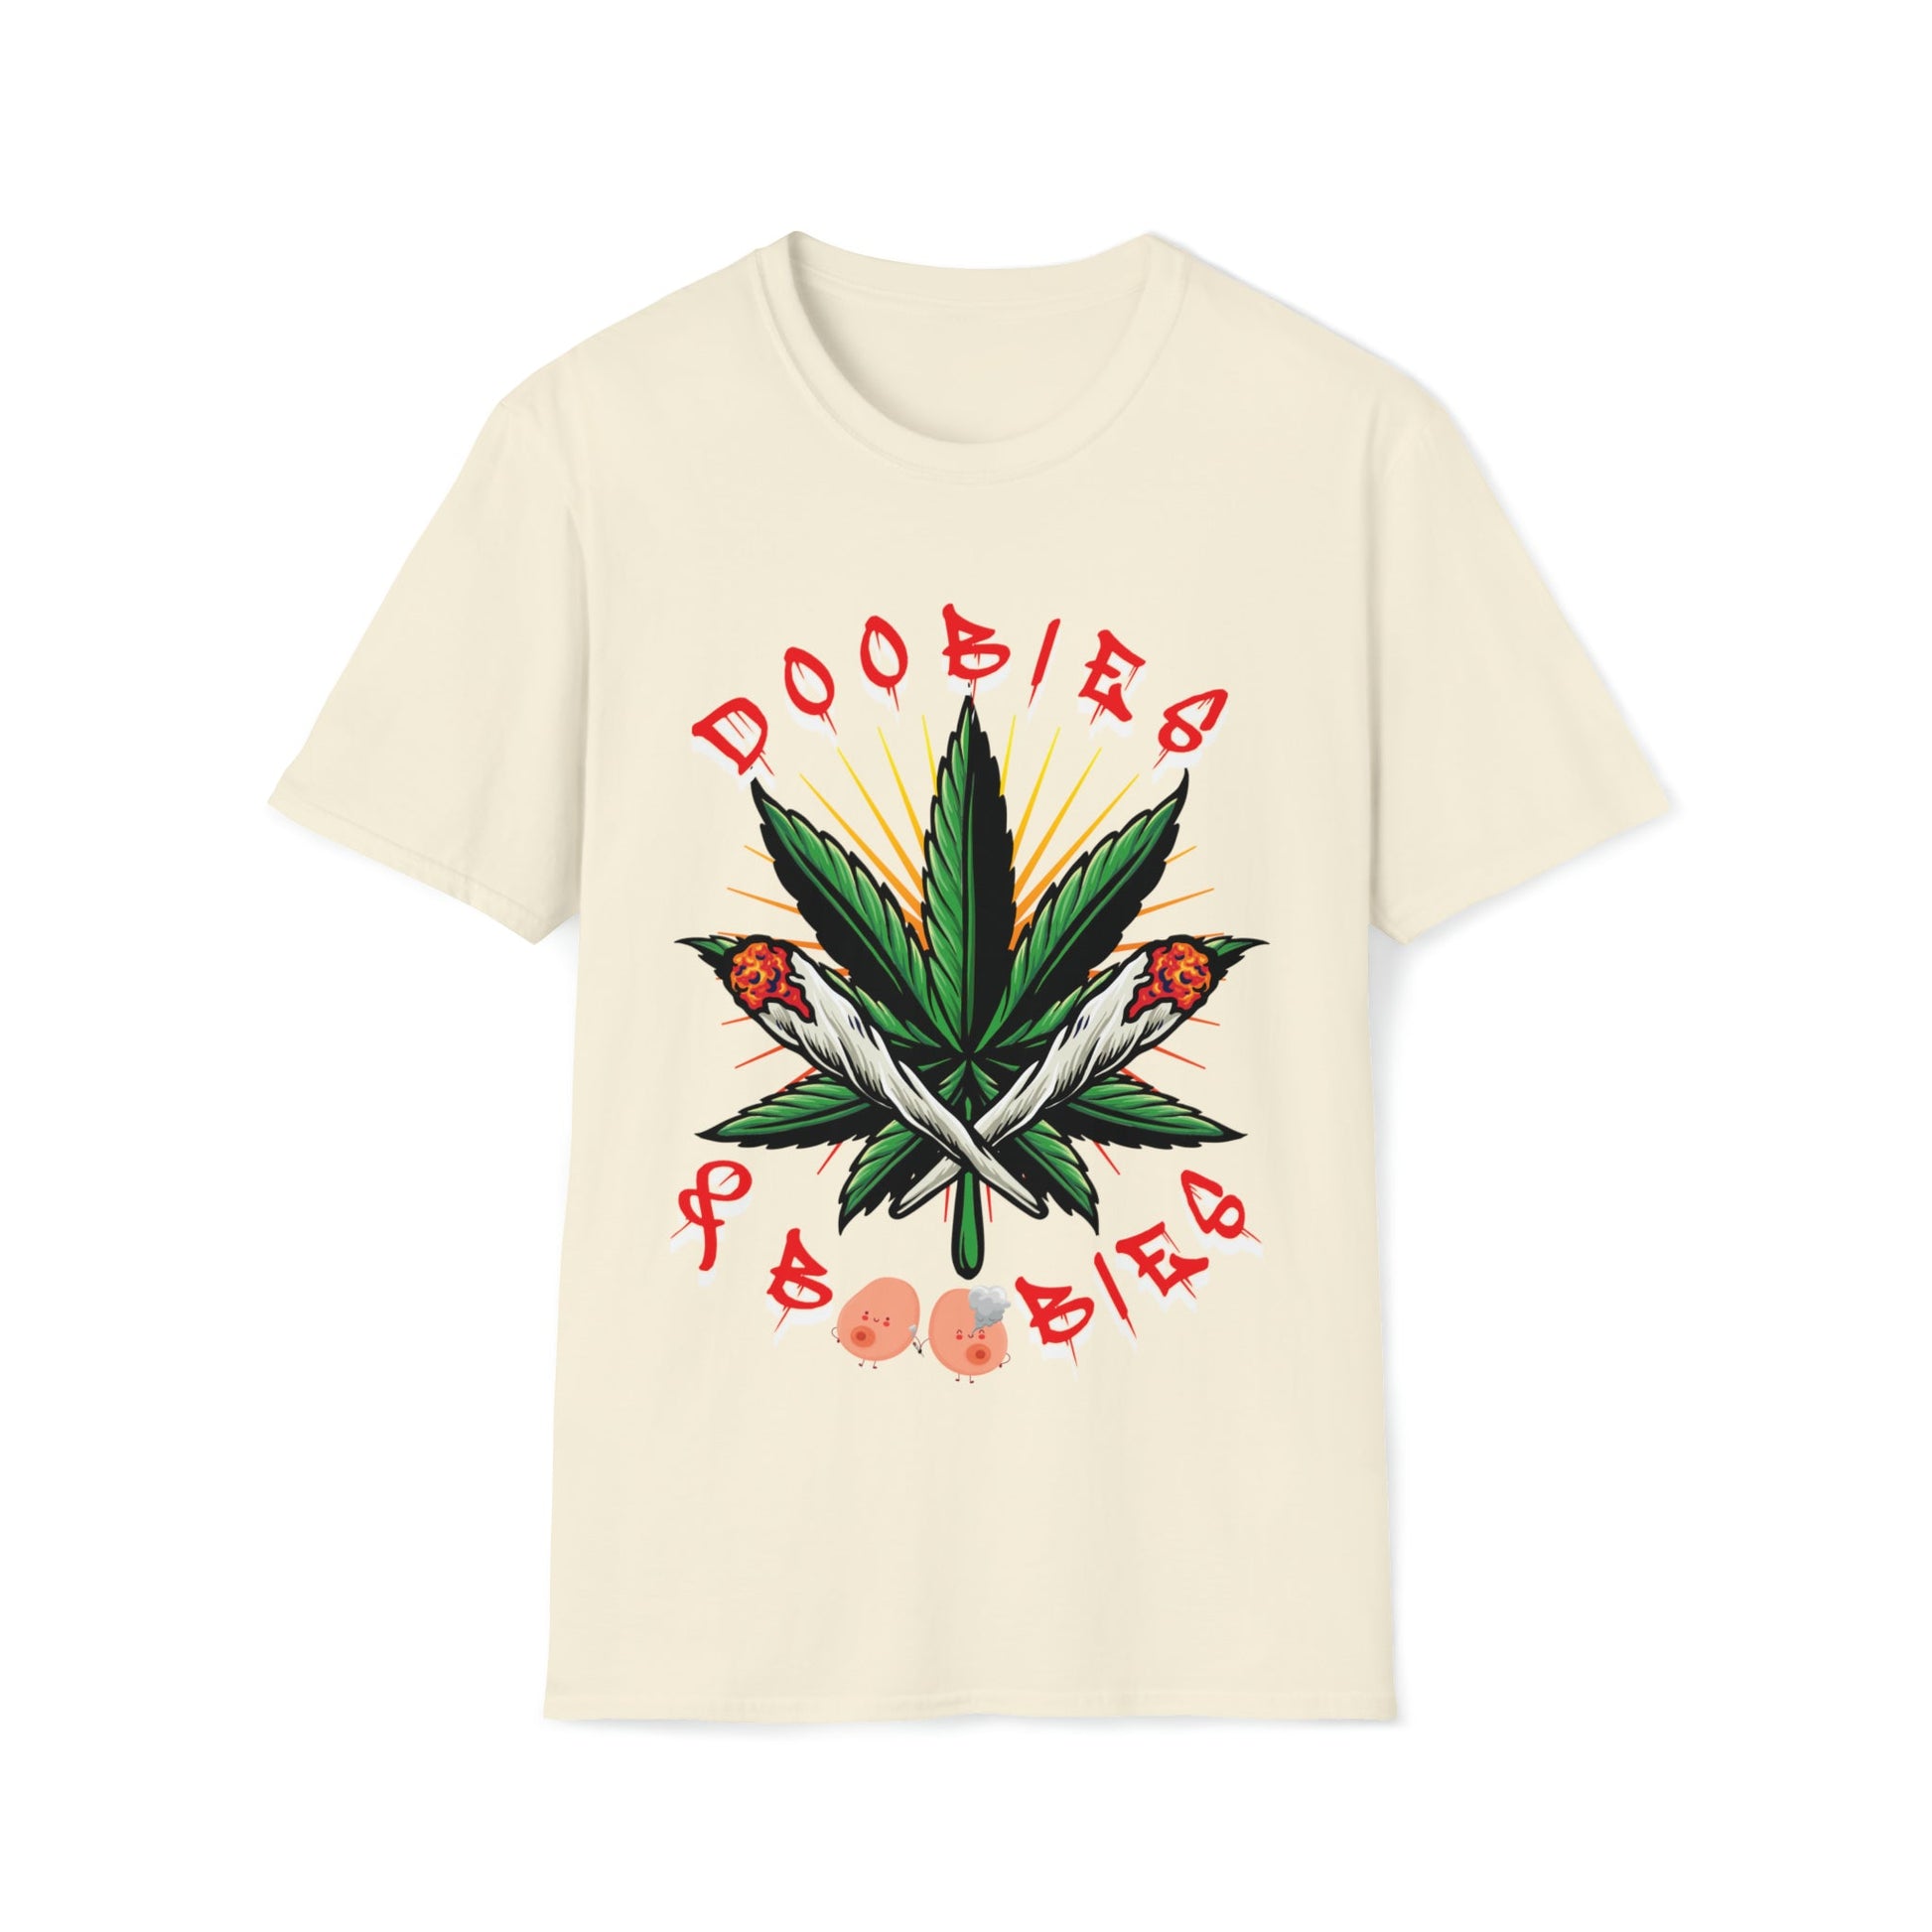 Doobies & Boobies - Unisex Softstyle T-Shirt - Ohio Custom Designs & Apparel LLC